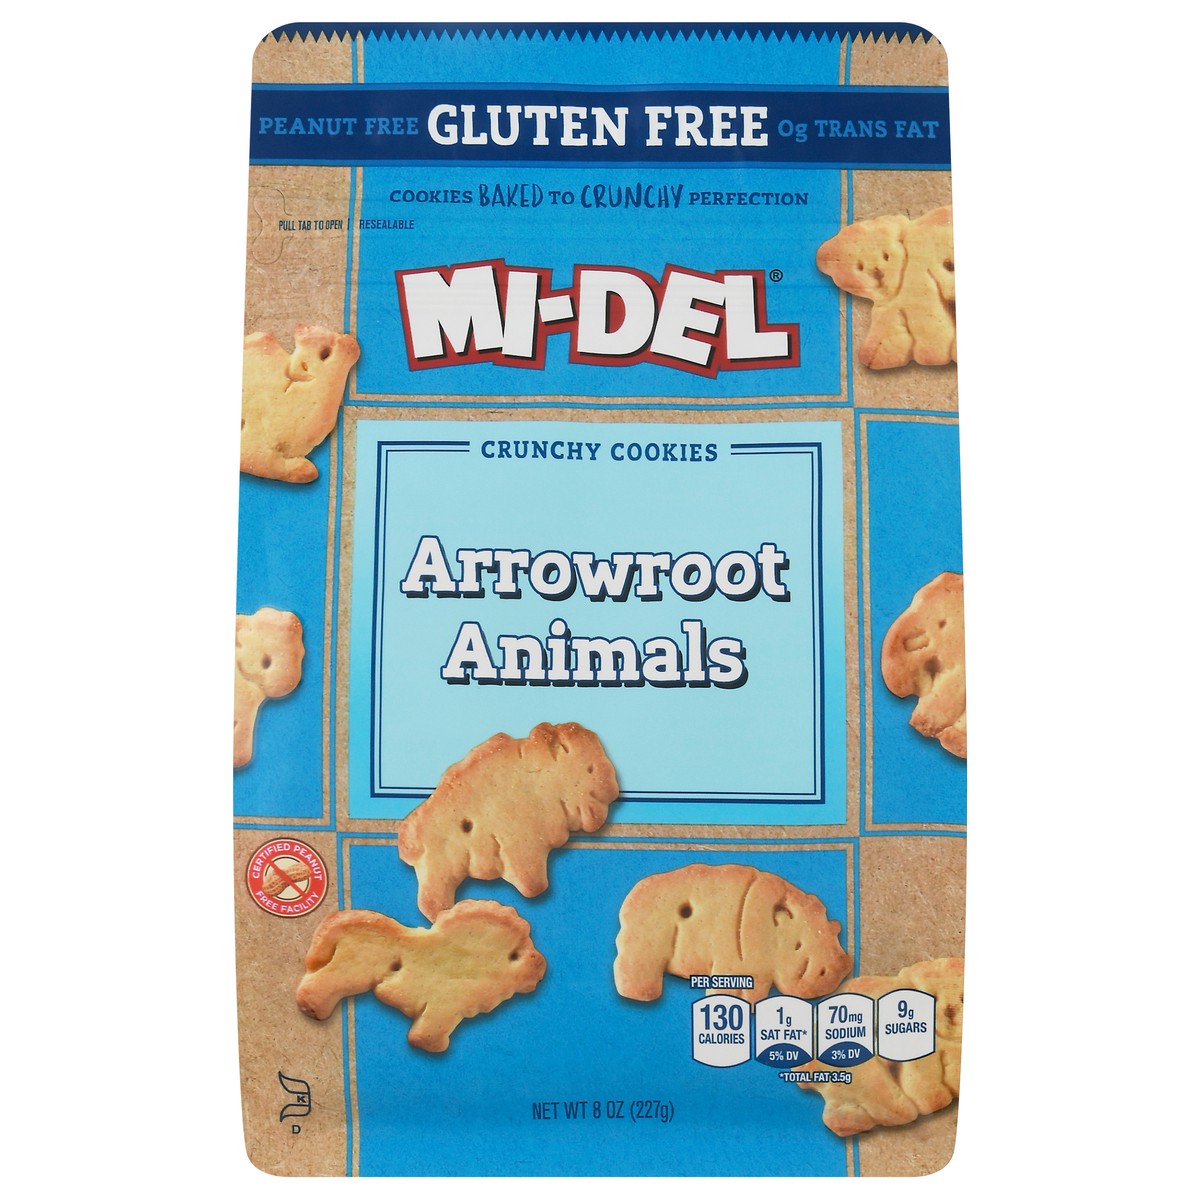 slide 1 of 9, MI-Del Midel Gluten Free Animal Cookies, 8 oz